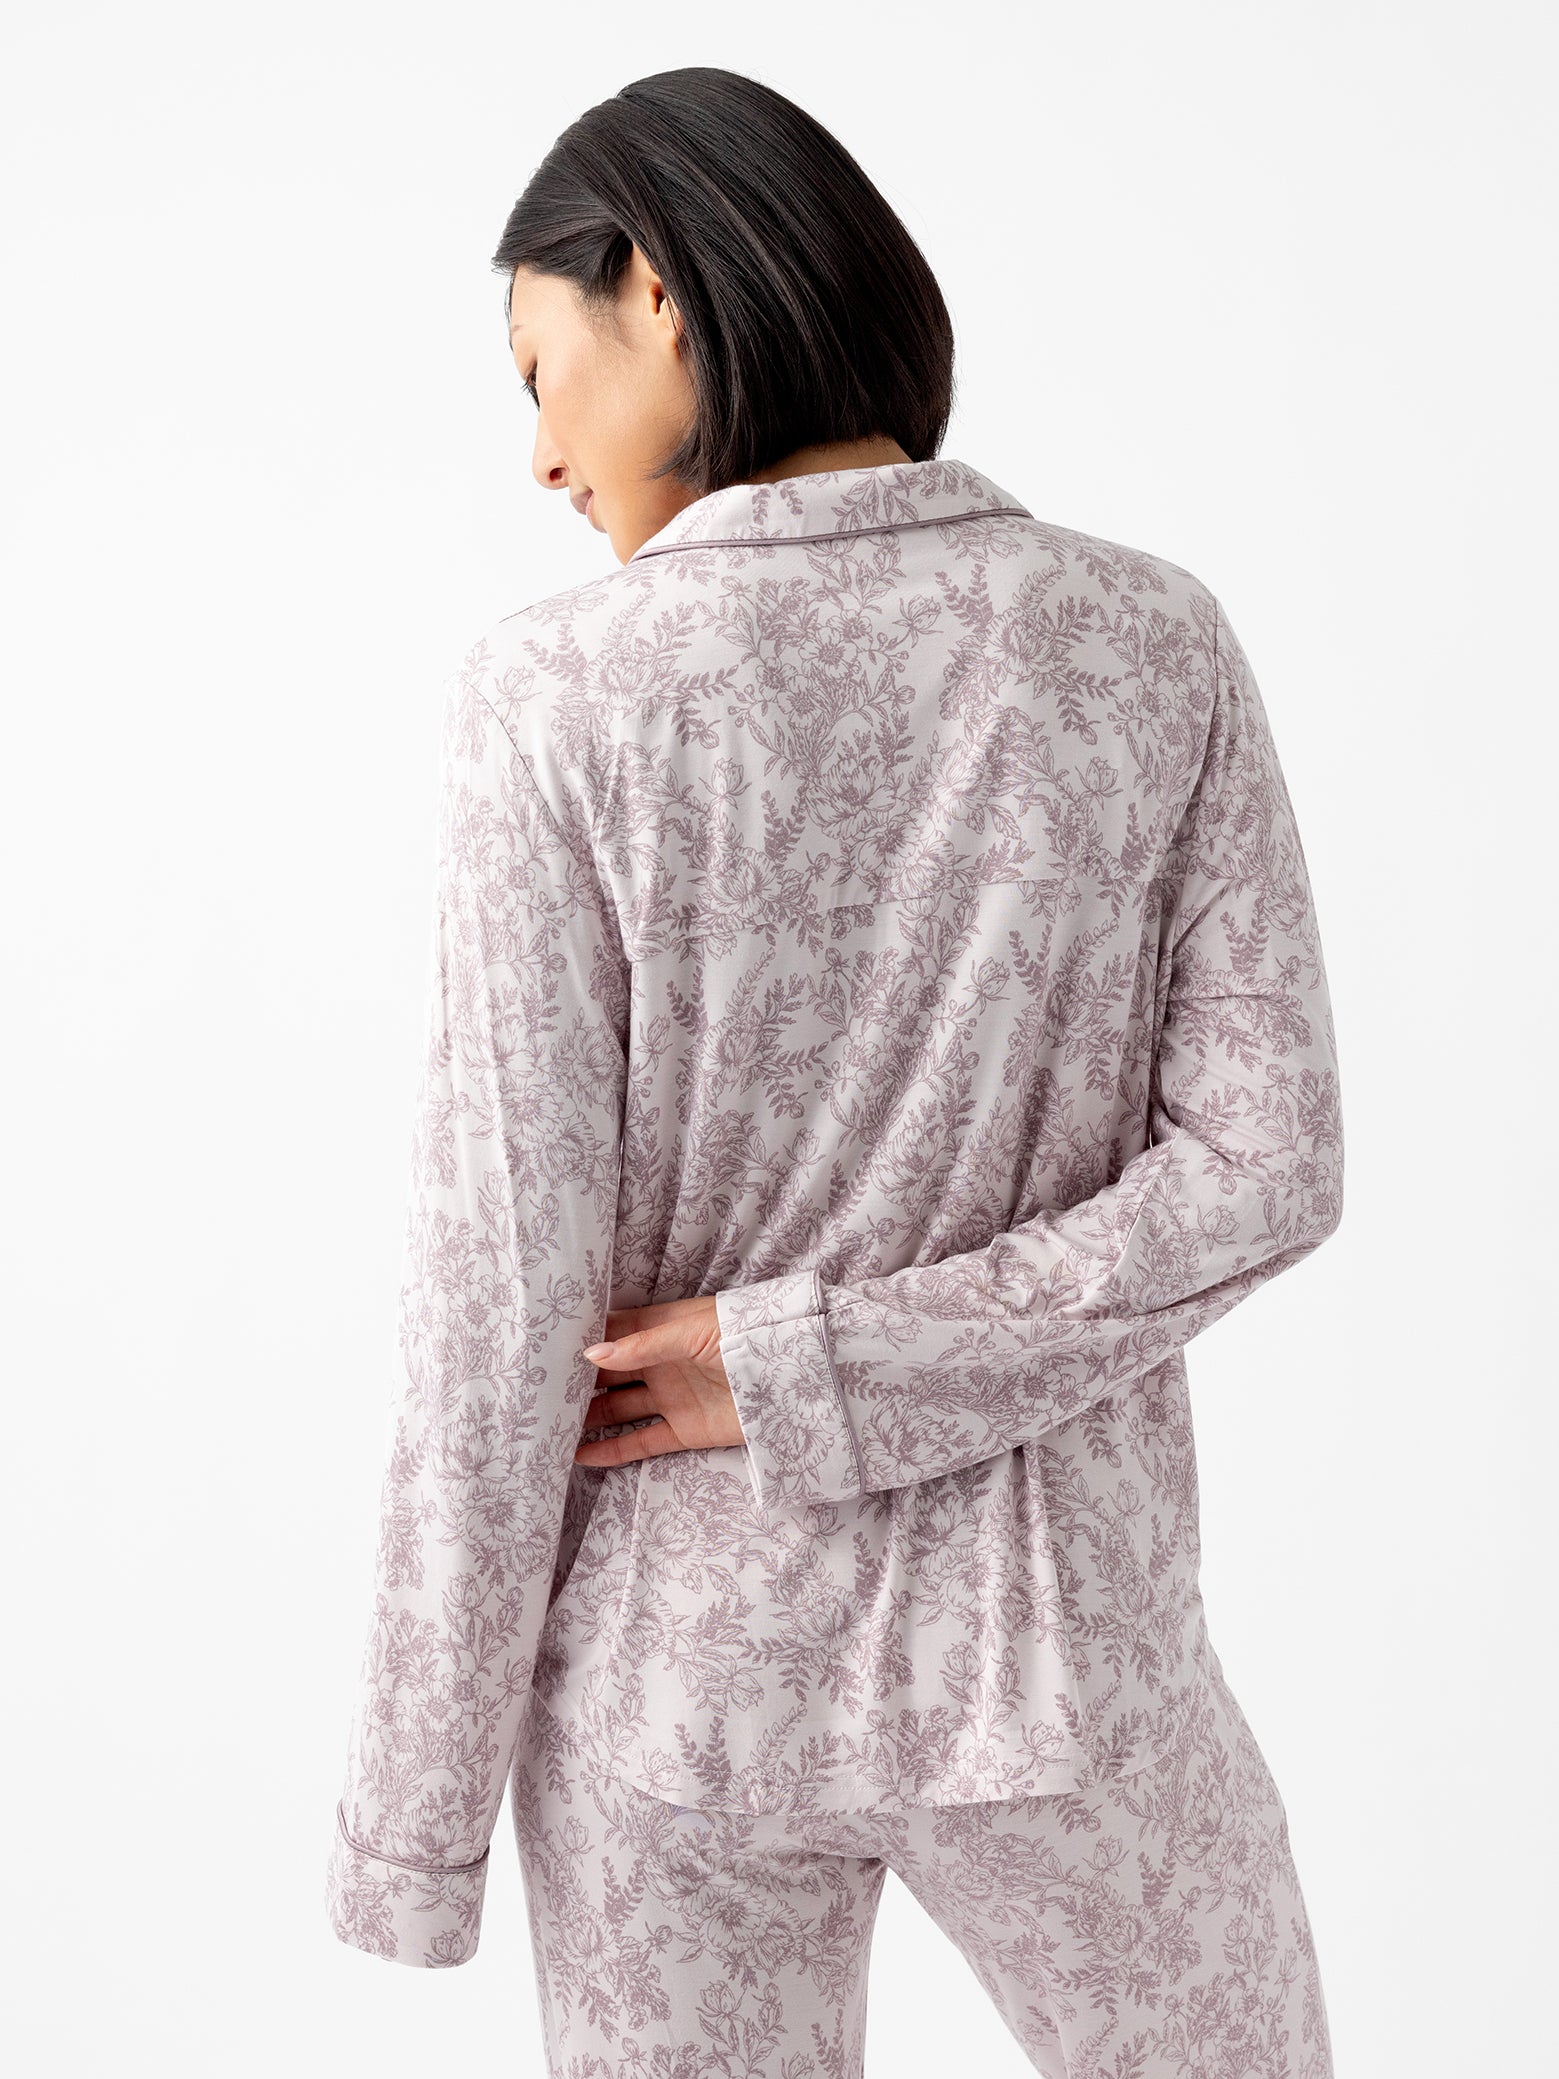 Back of woman wearing lilac toile pajama shirt 